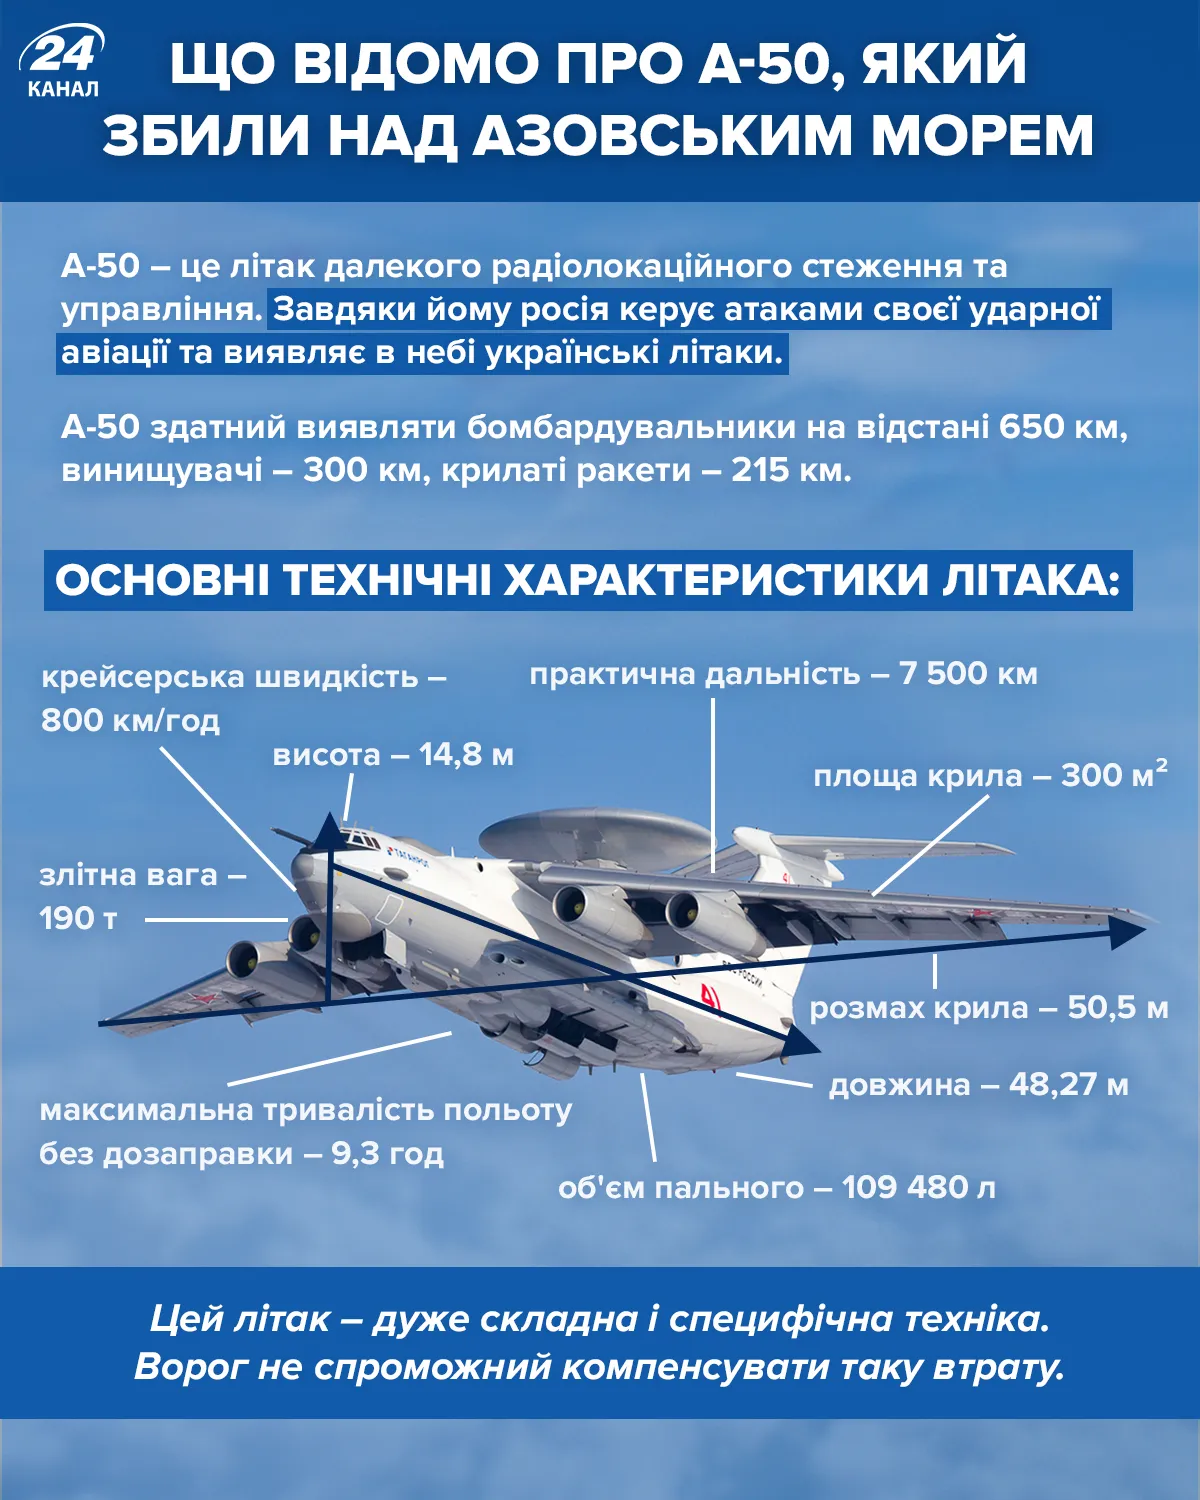 Самолет А-50 характеристики